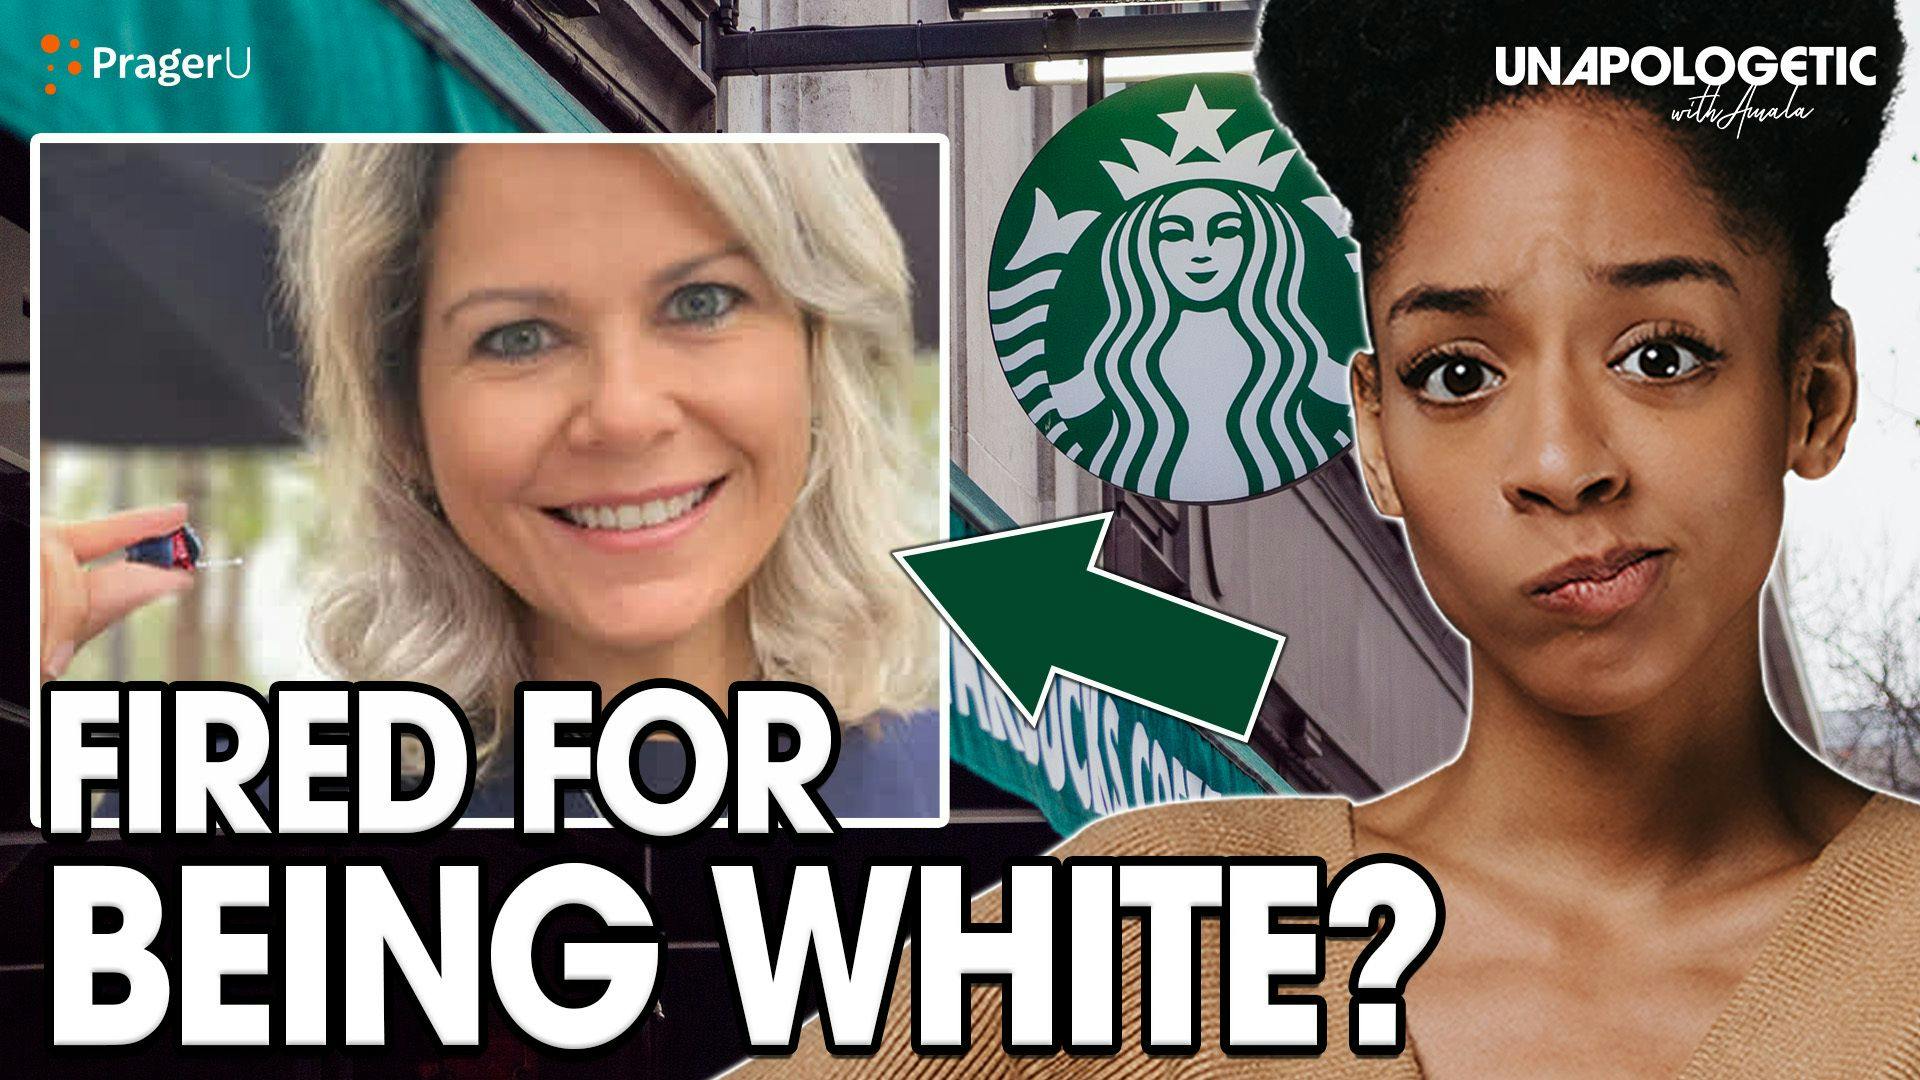 Starbucks Fired Her for Being White?